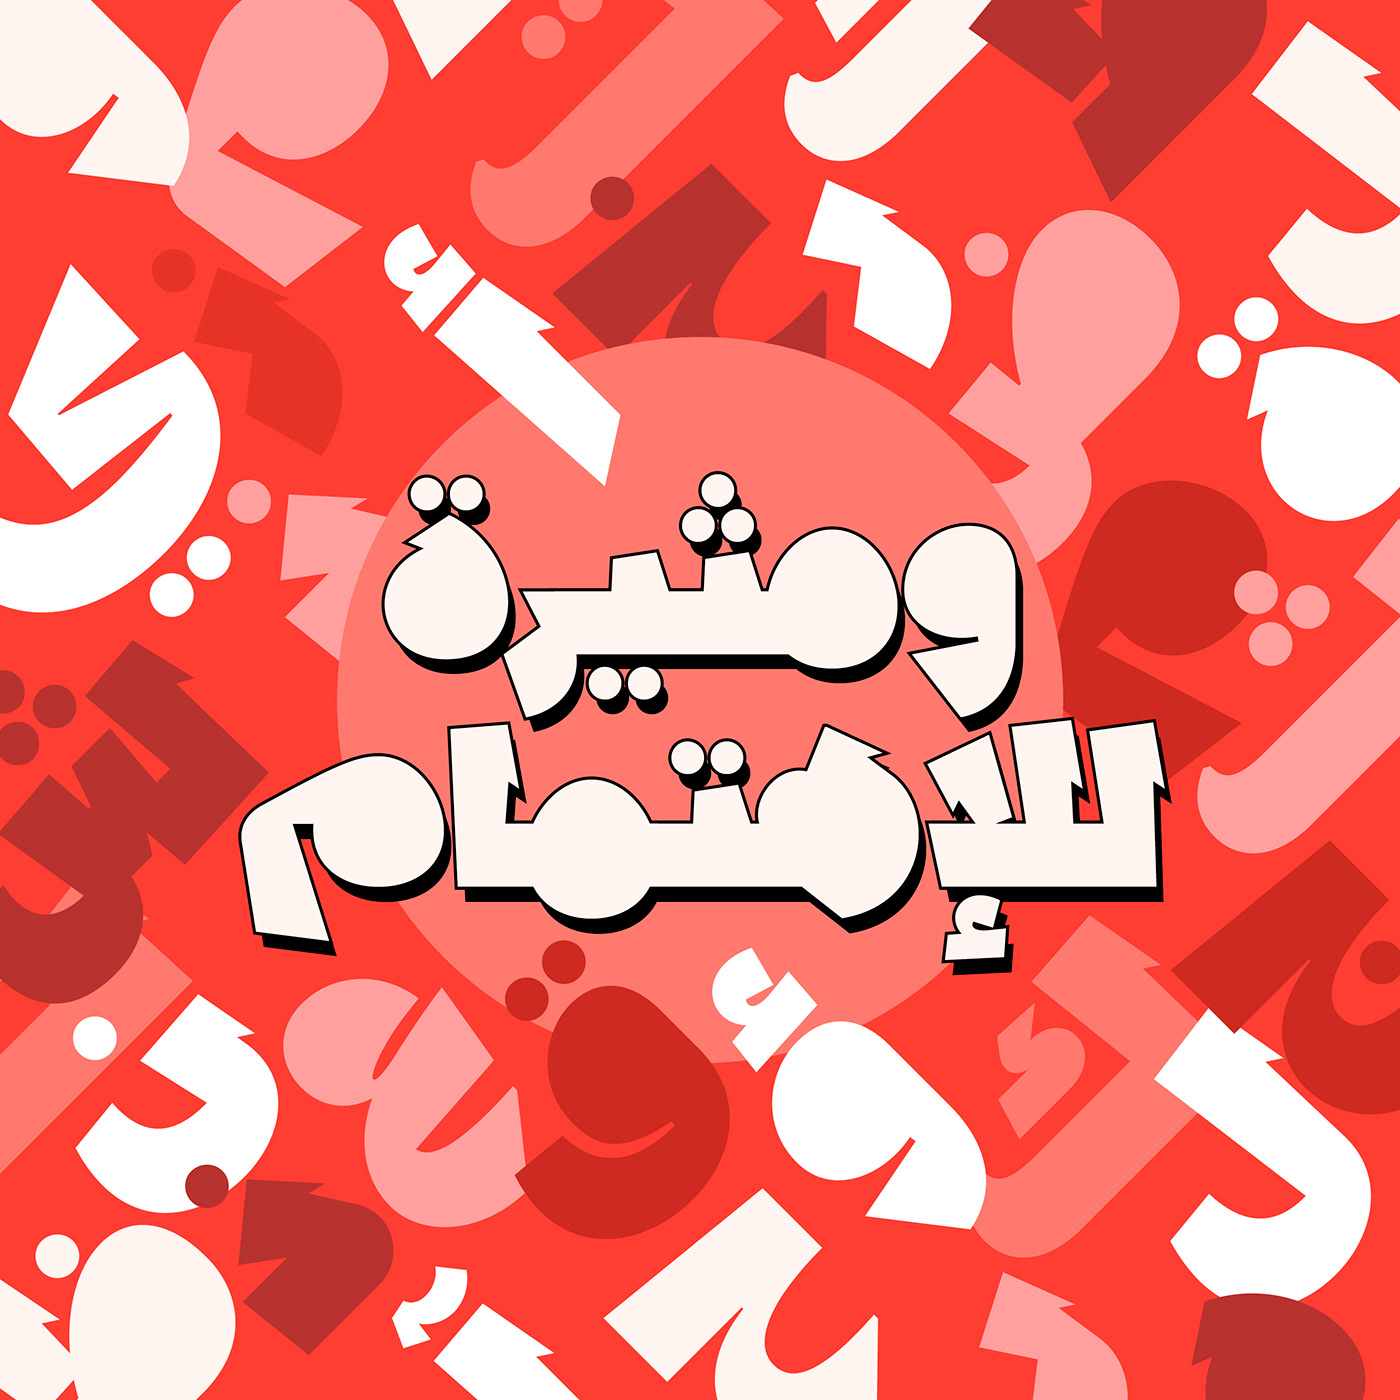 arabic comic font islamic art Typeface تايبوغرافي خط عربي خطوط عربية